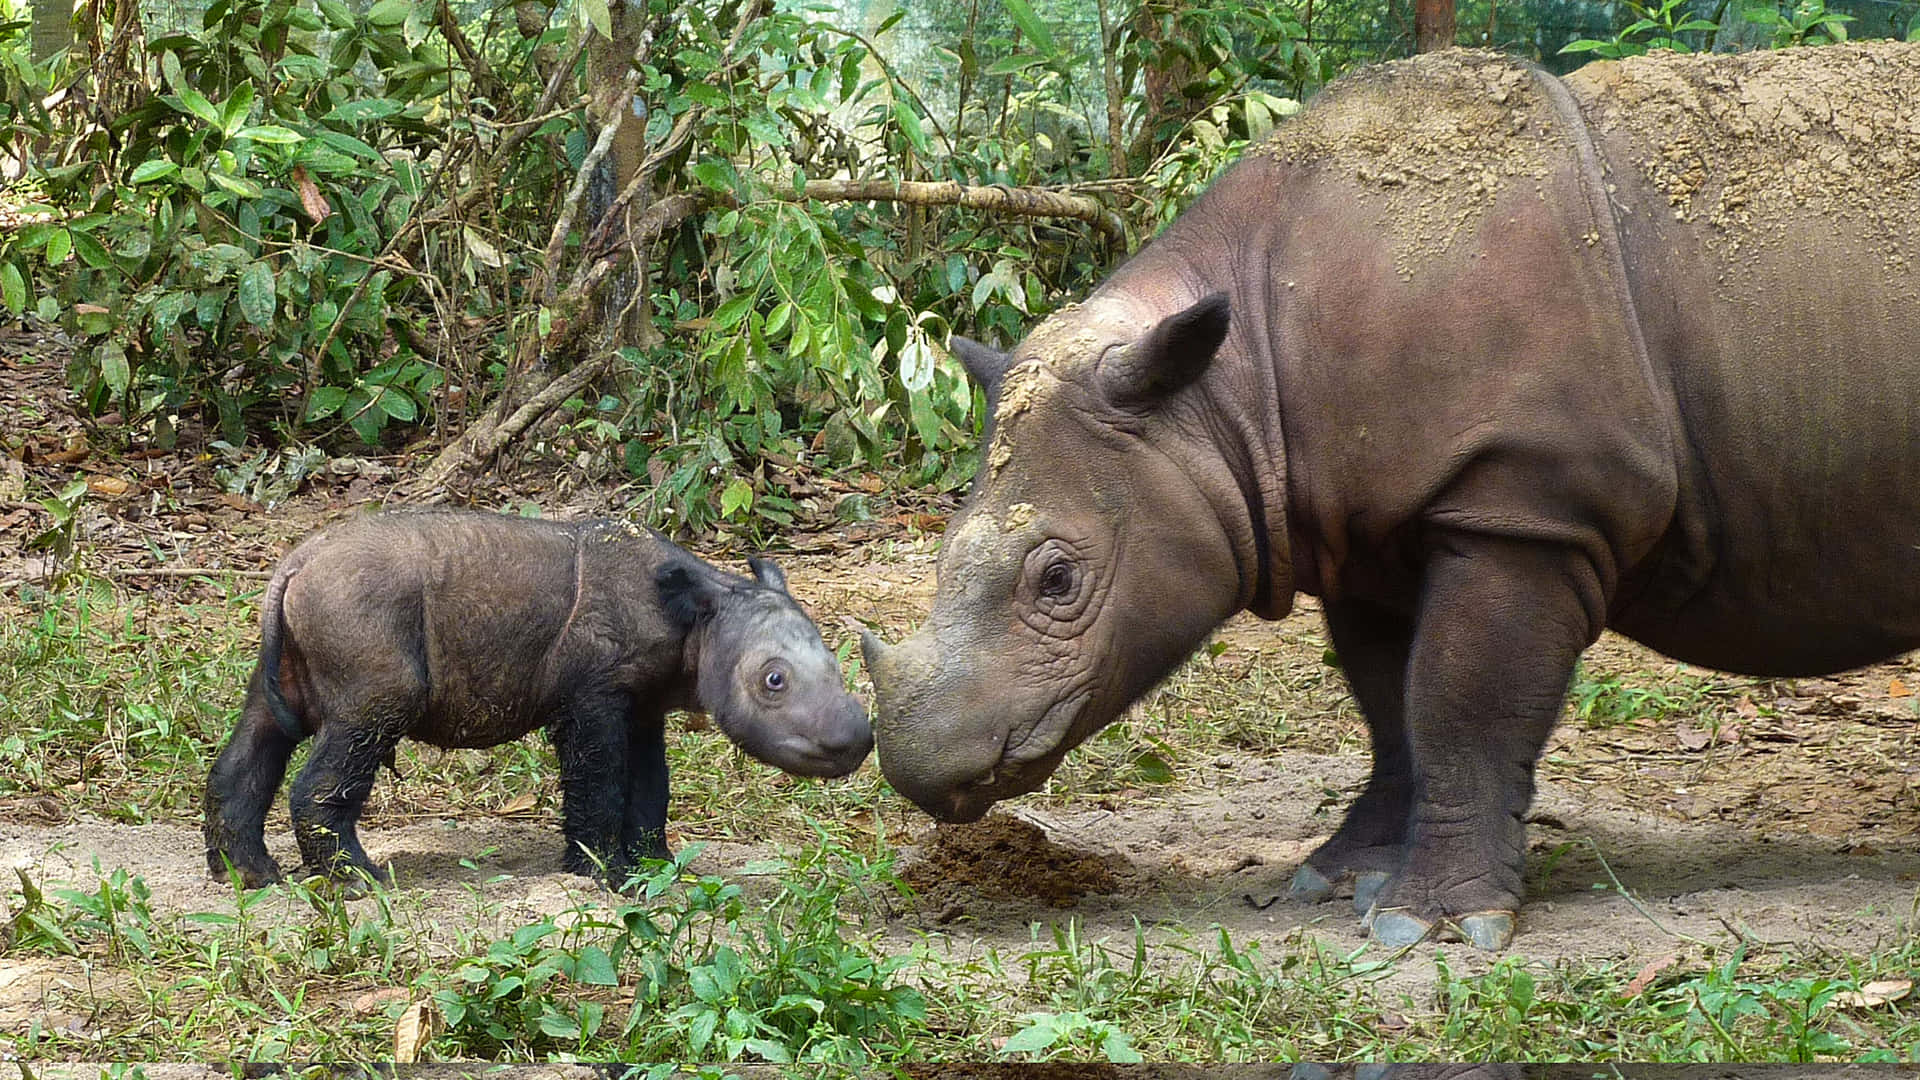 "A Rhinoceros in its Natural Habitat"